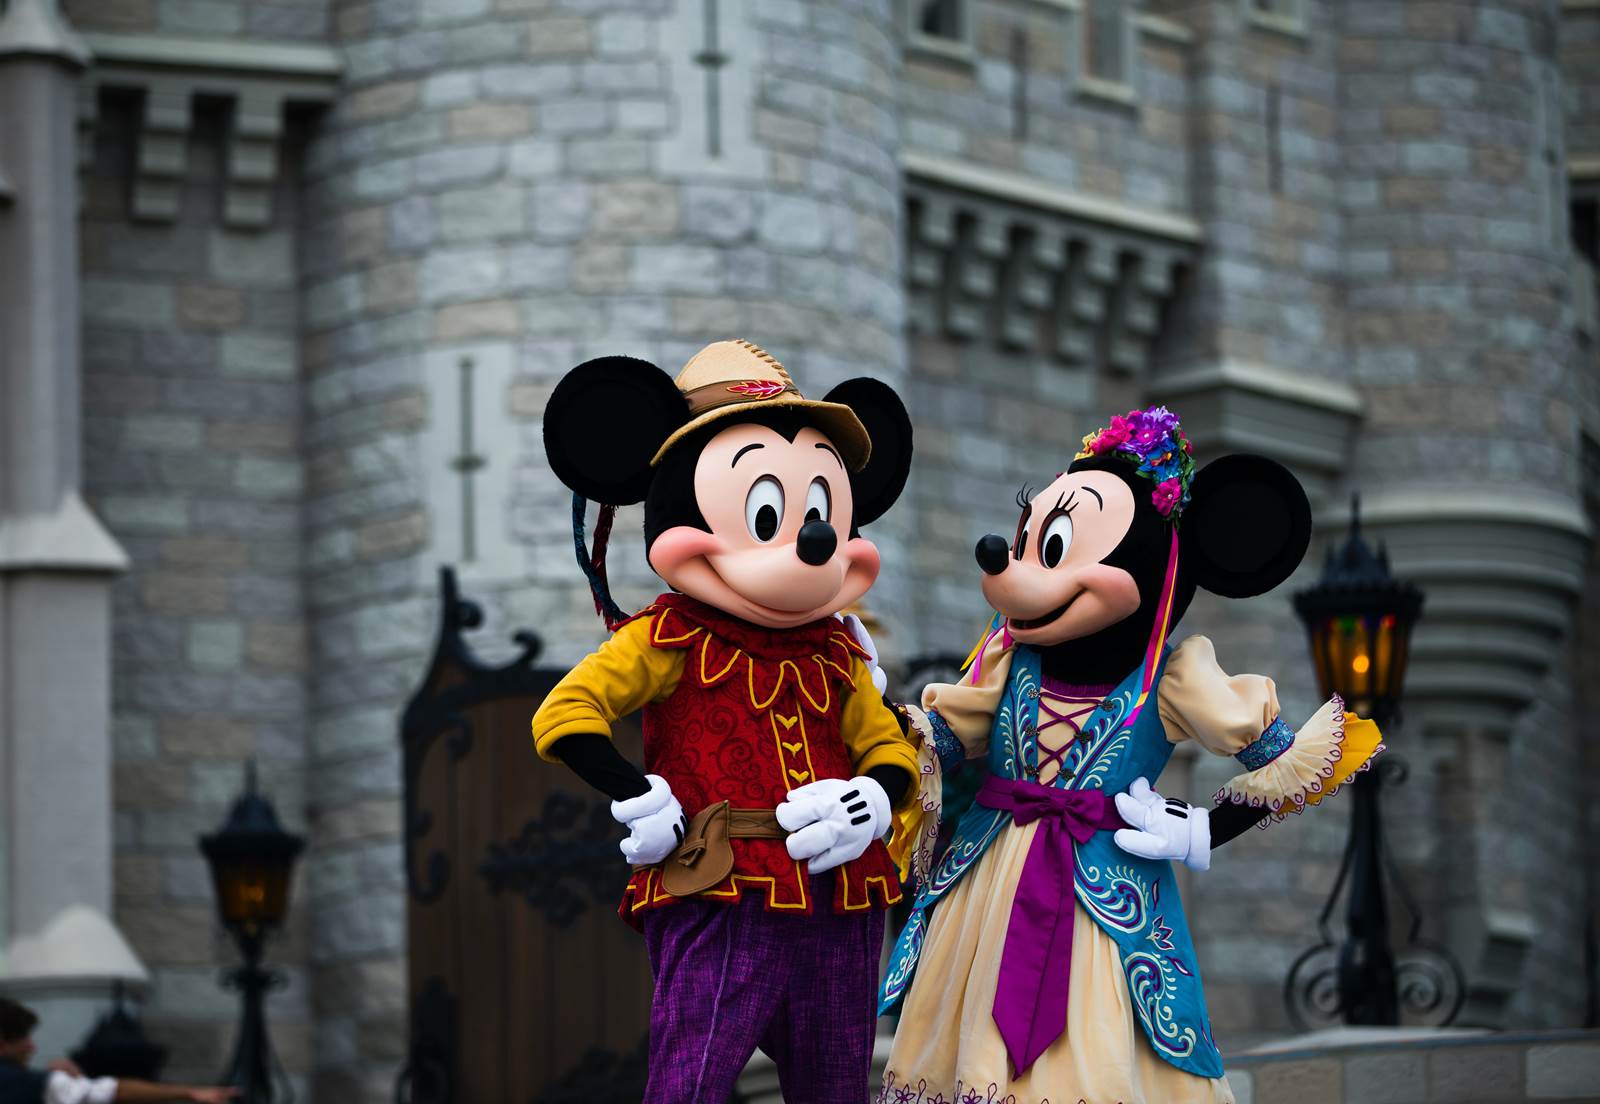 迪士尼解封！米老鼠可以抱抱了 Mickey Mouse can hug again at Disneyland